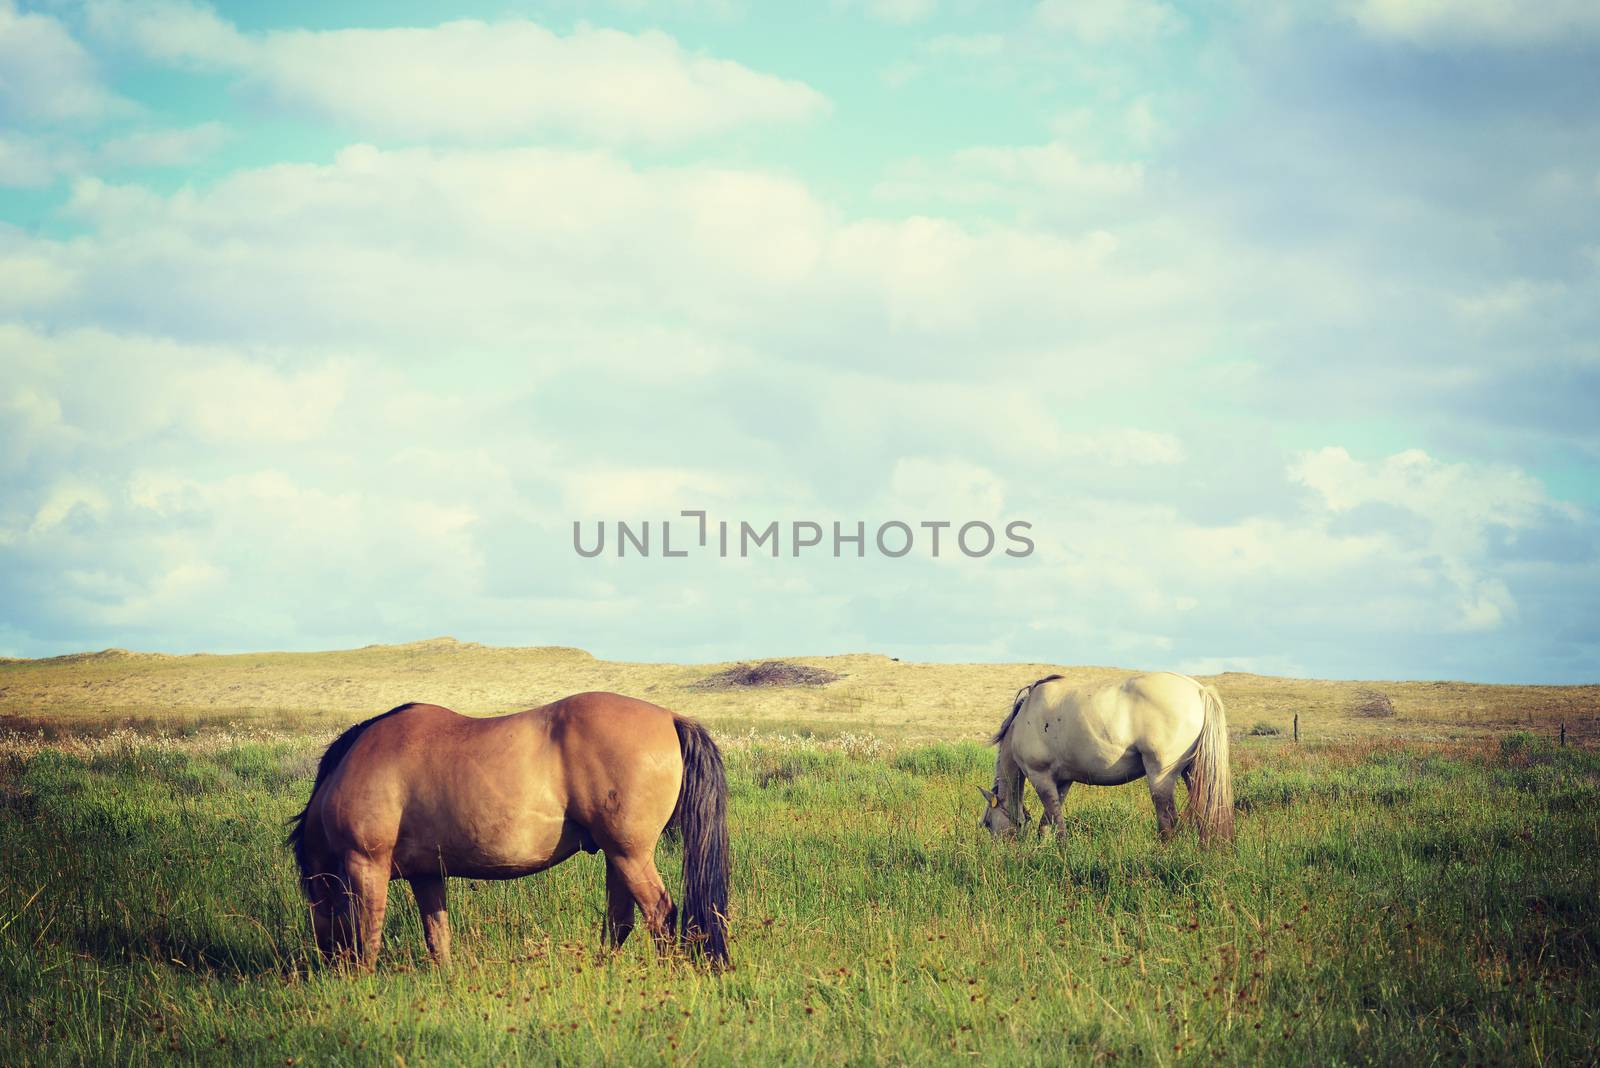 Grazing horses on pasture under blue sky countryside landscape. Vibrant colors vintage effect photography.